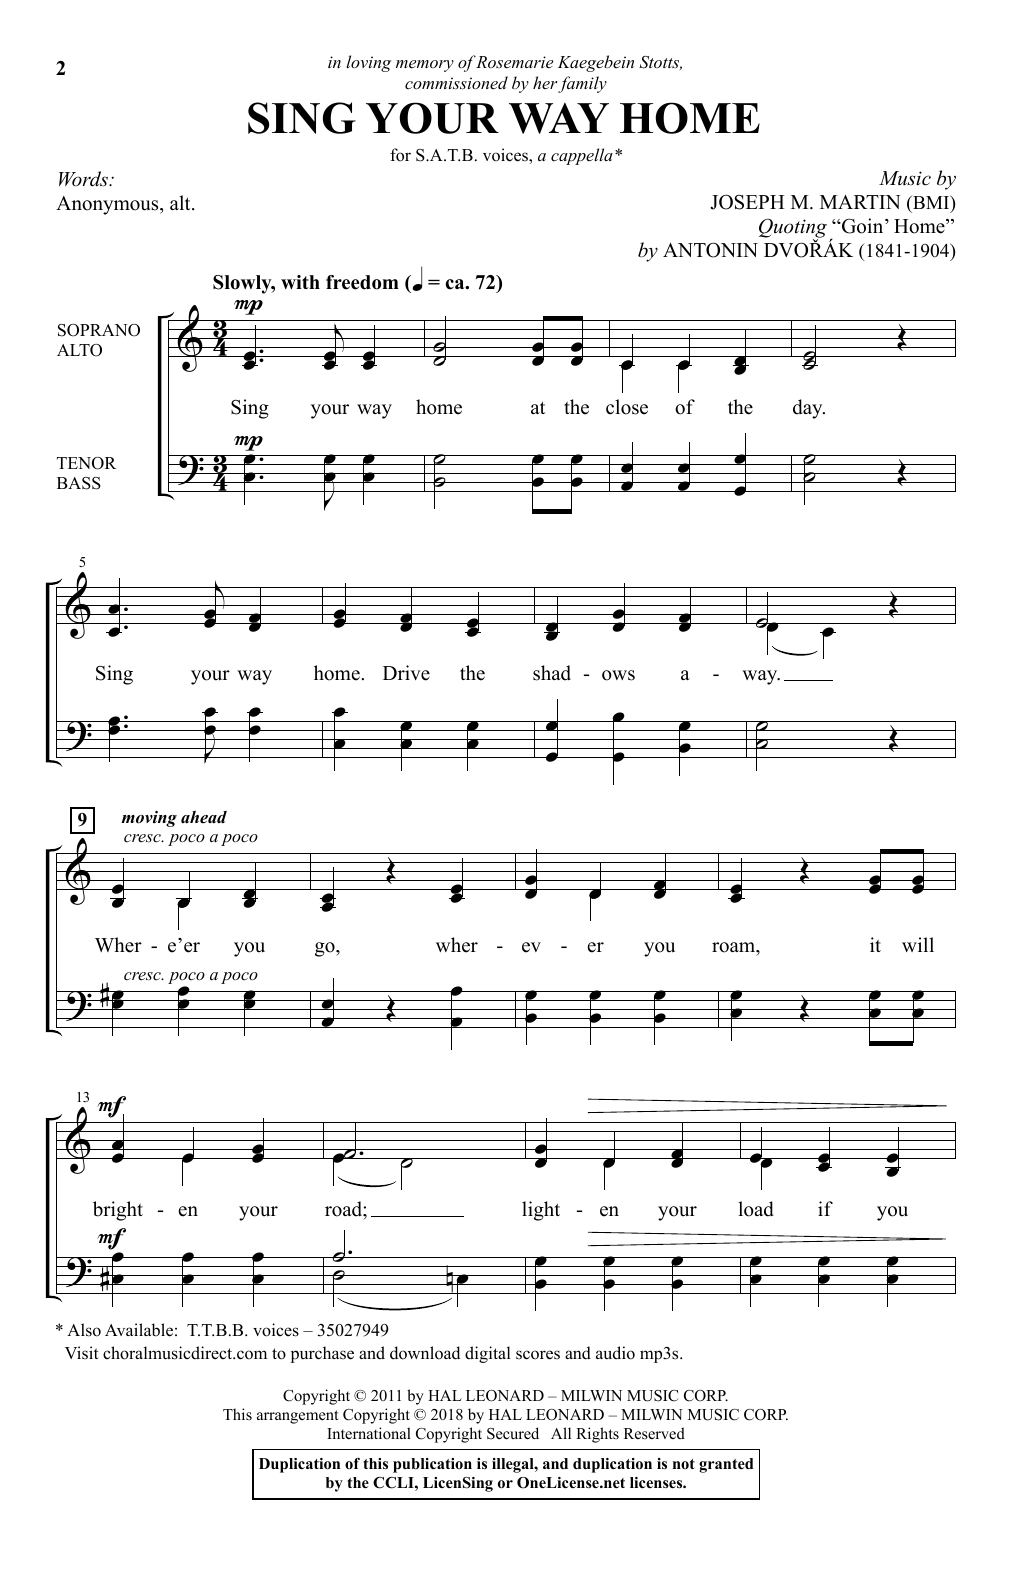 Download Joseph M. Martin Sing Your Way Home Sheet Music